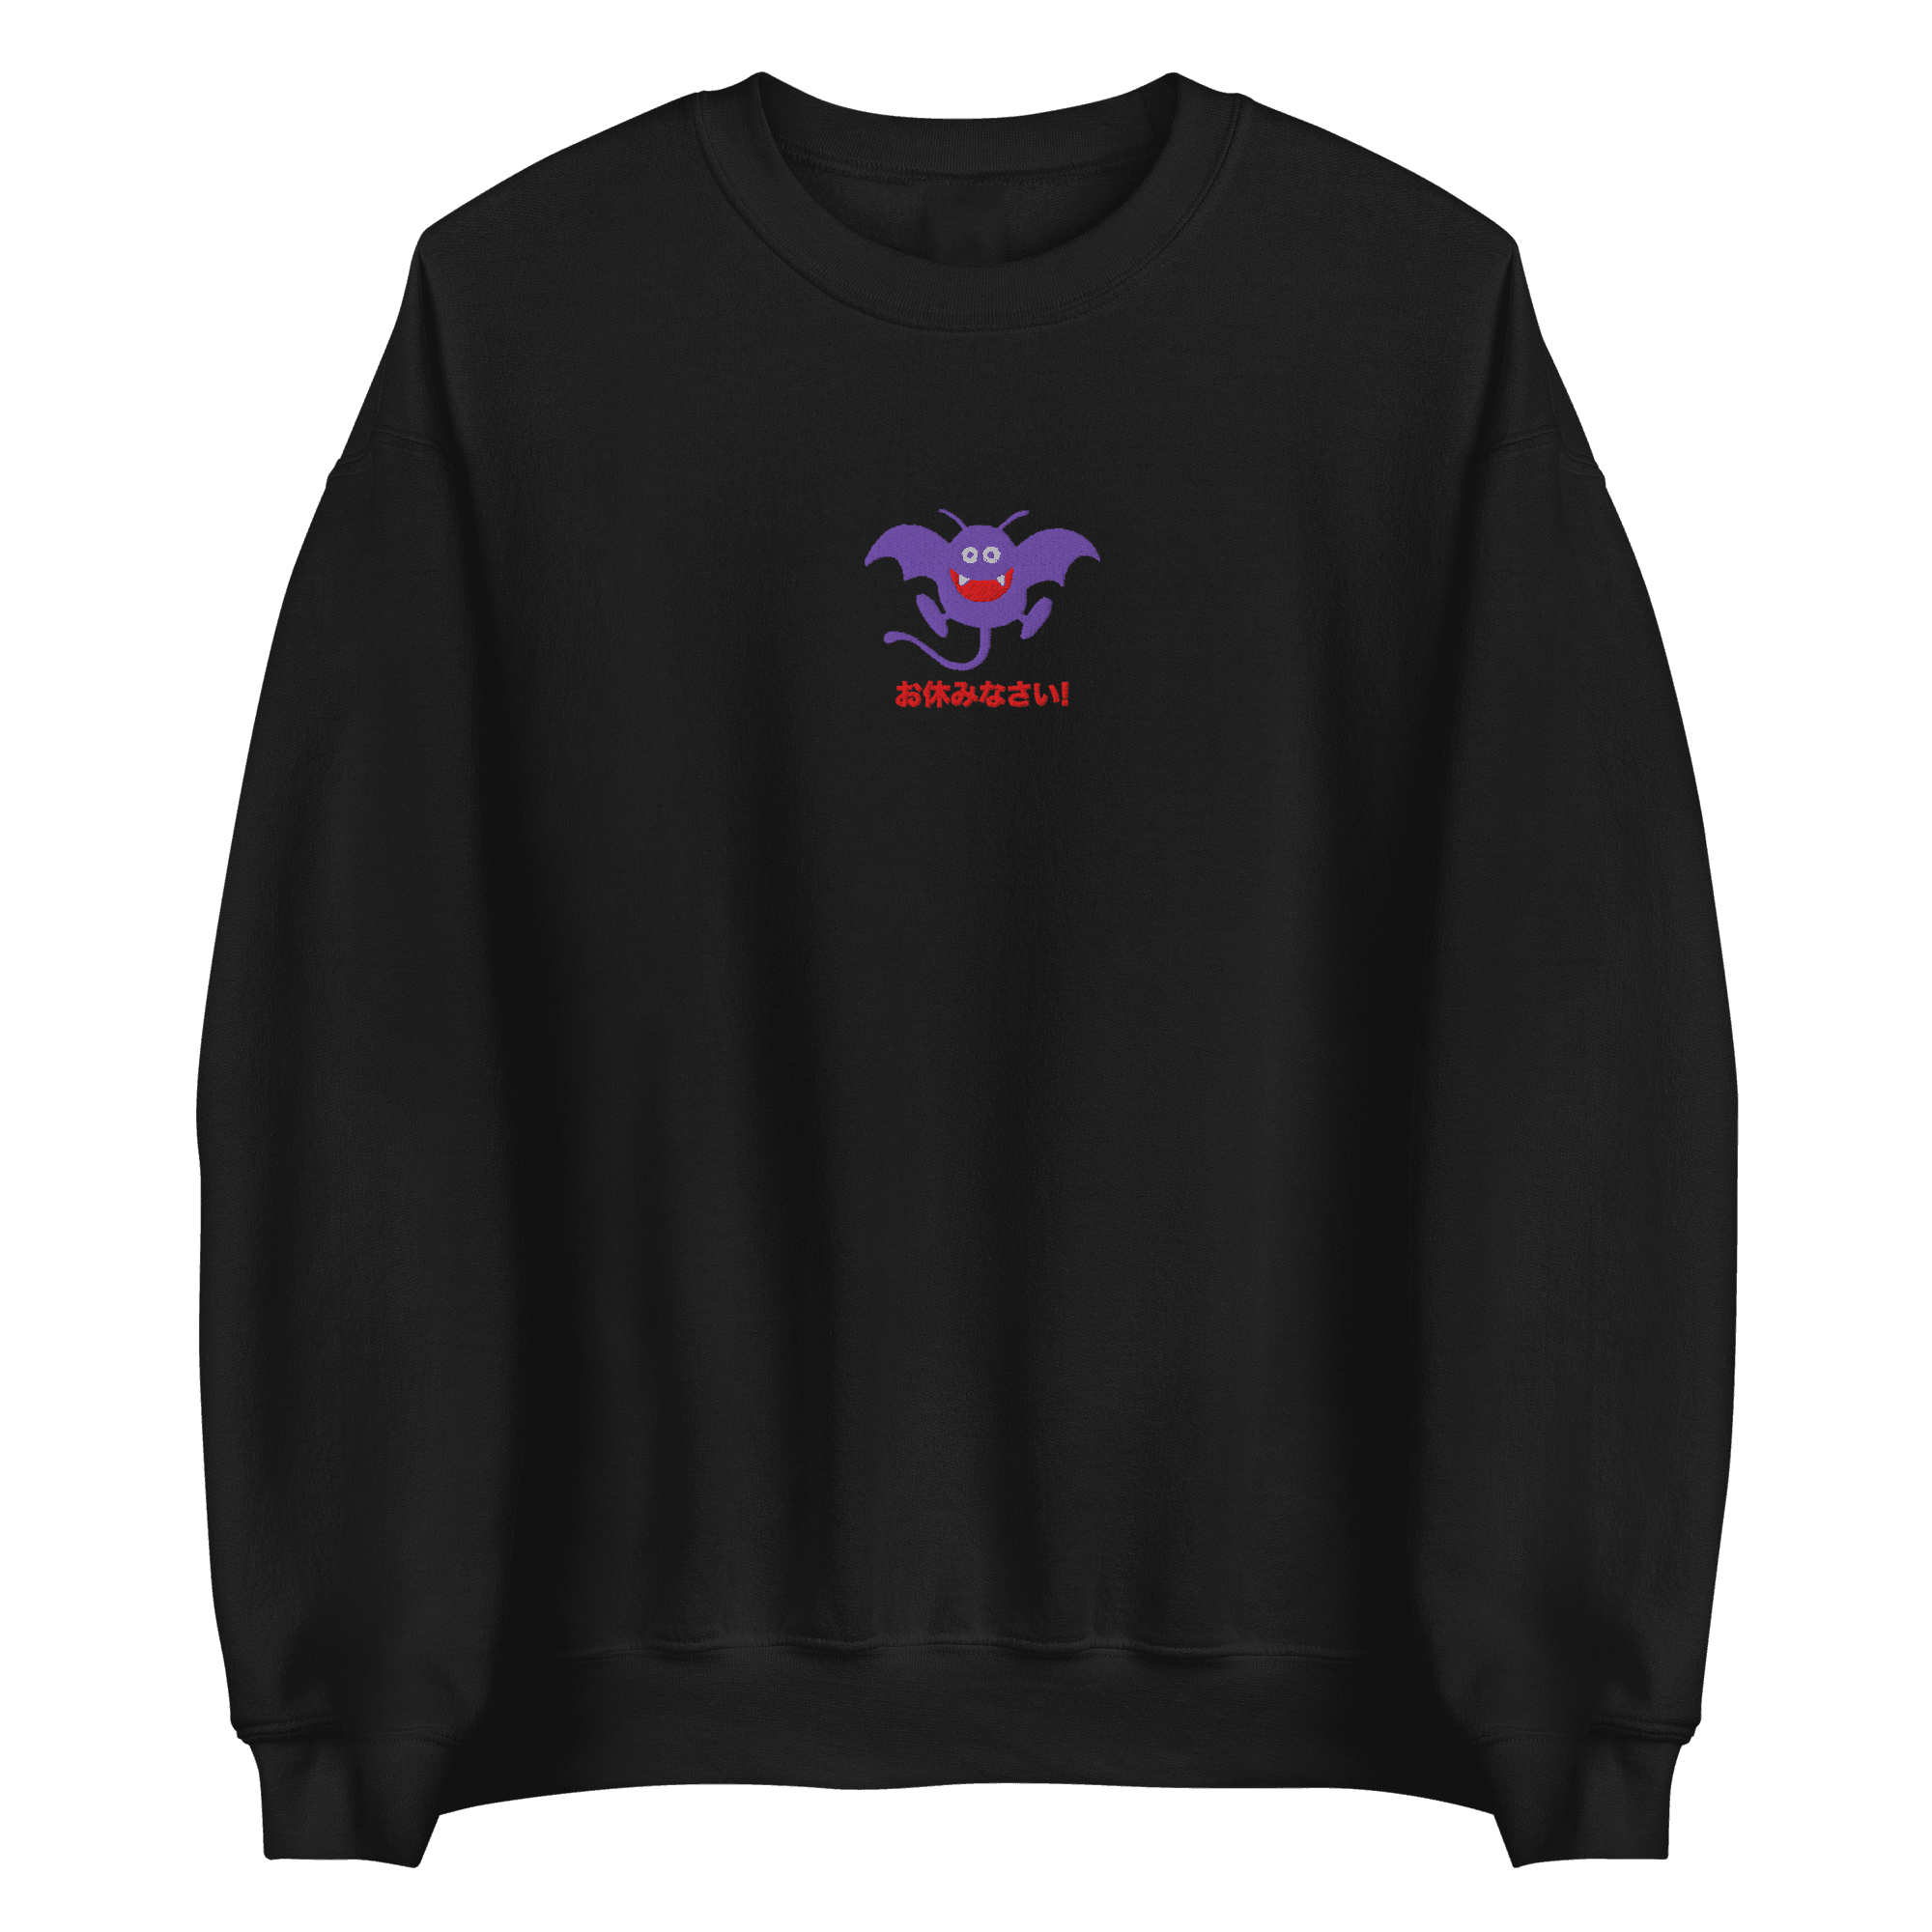 Goodnight!® Embroidered Sweatshirt - Kikillo Club